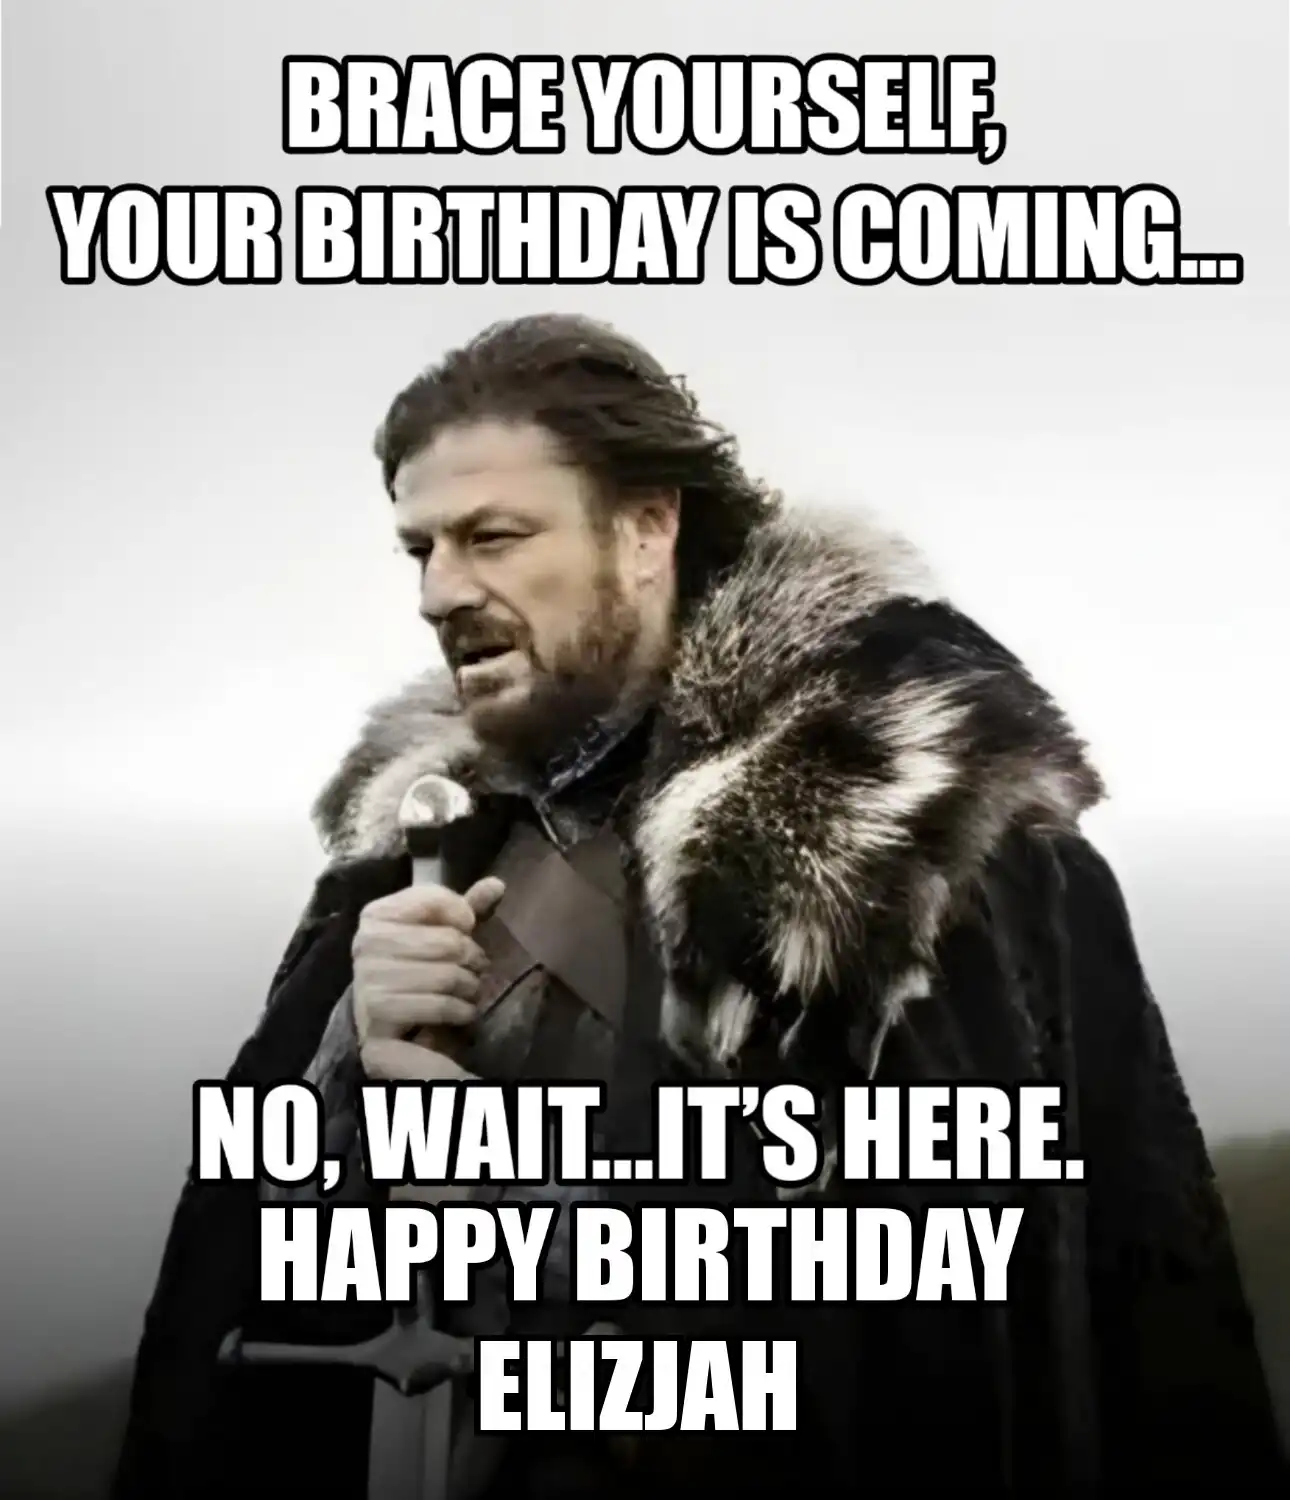 Happy Birthday Elizjah Brace Yourself Your Birthday Is Coming Meme